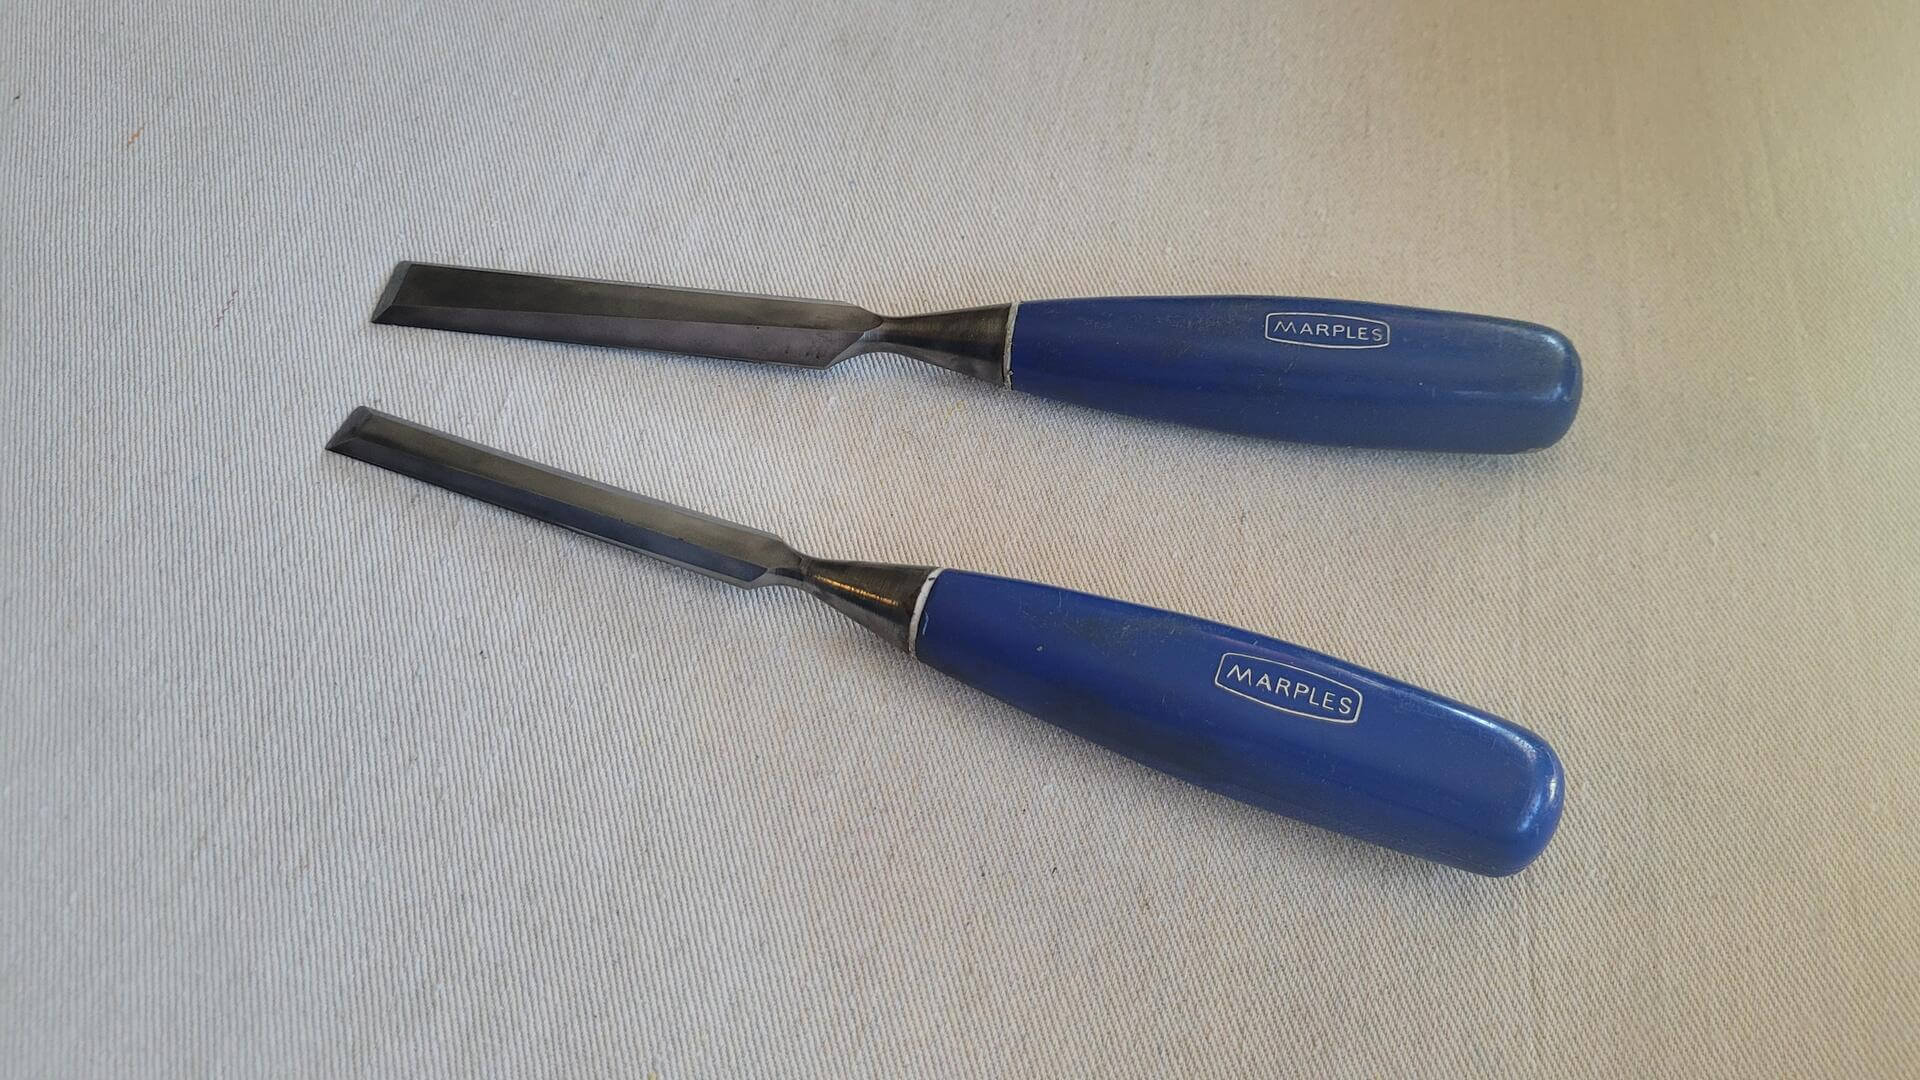 marples-blue-chip-beveled-edge-chisels-set-of-2-vintage-made-in-england-cabinet-maker-edge-tools